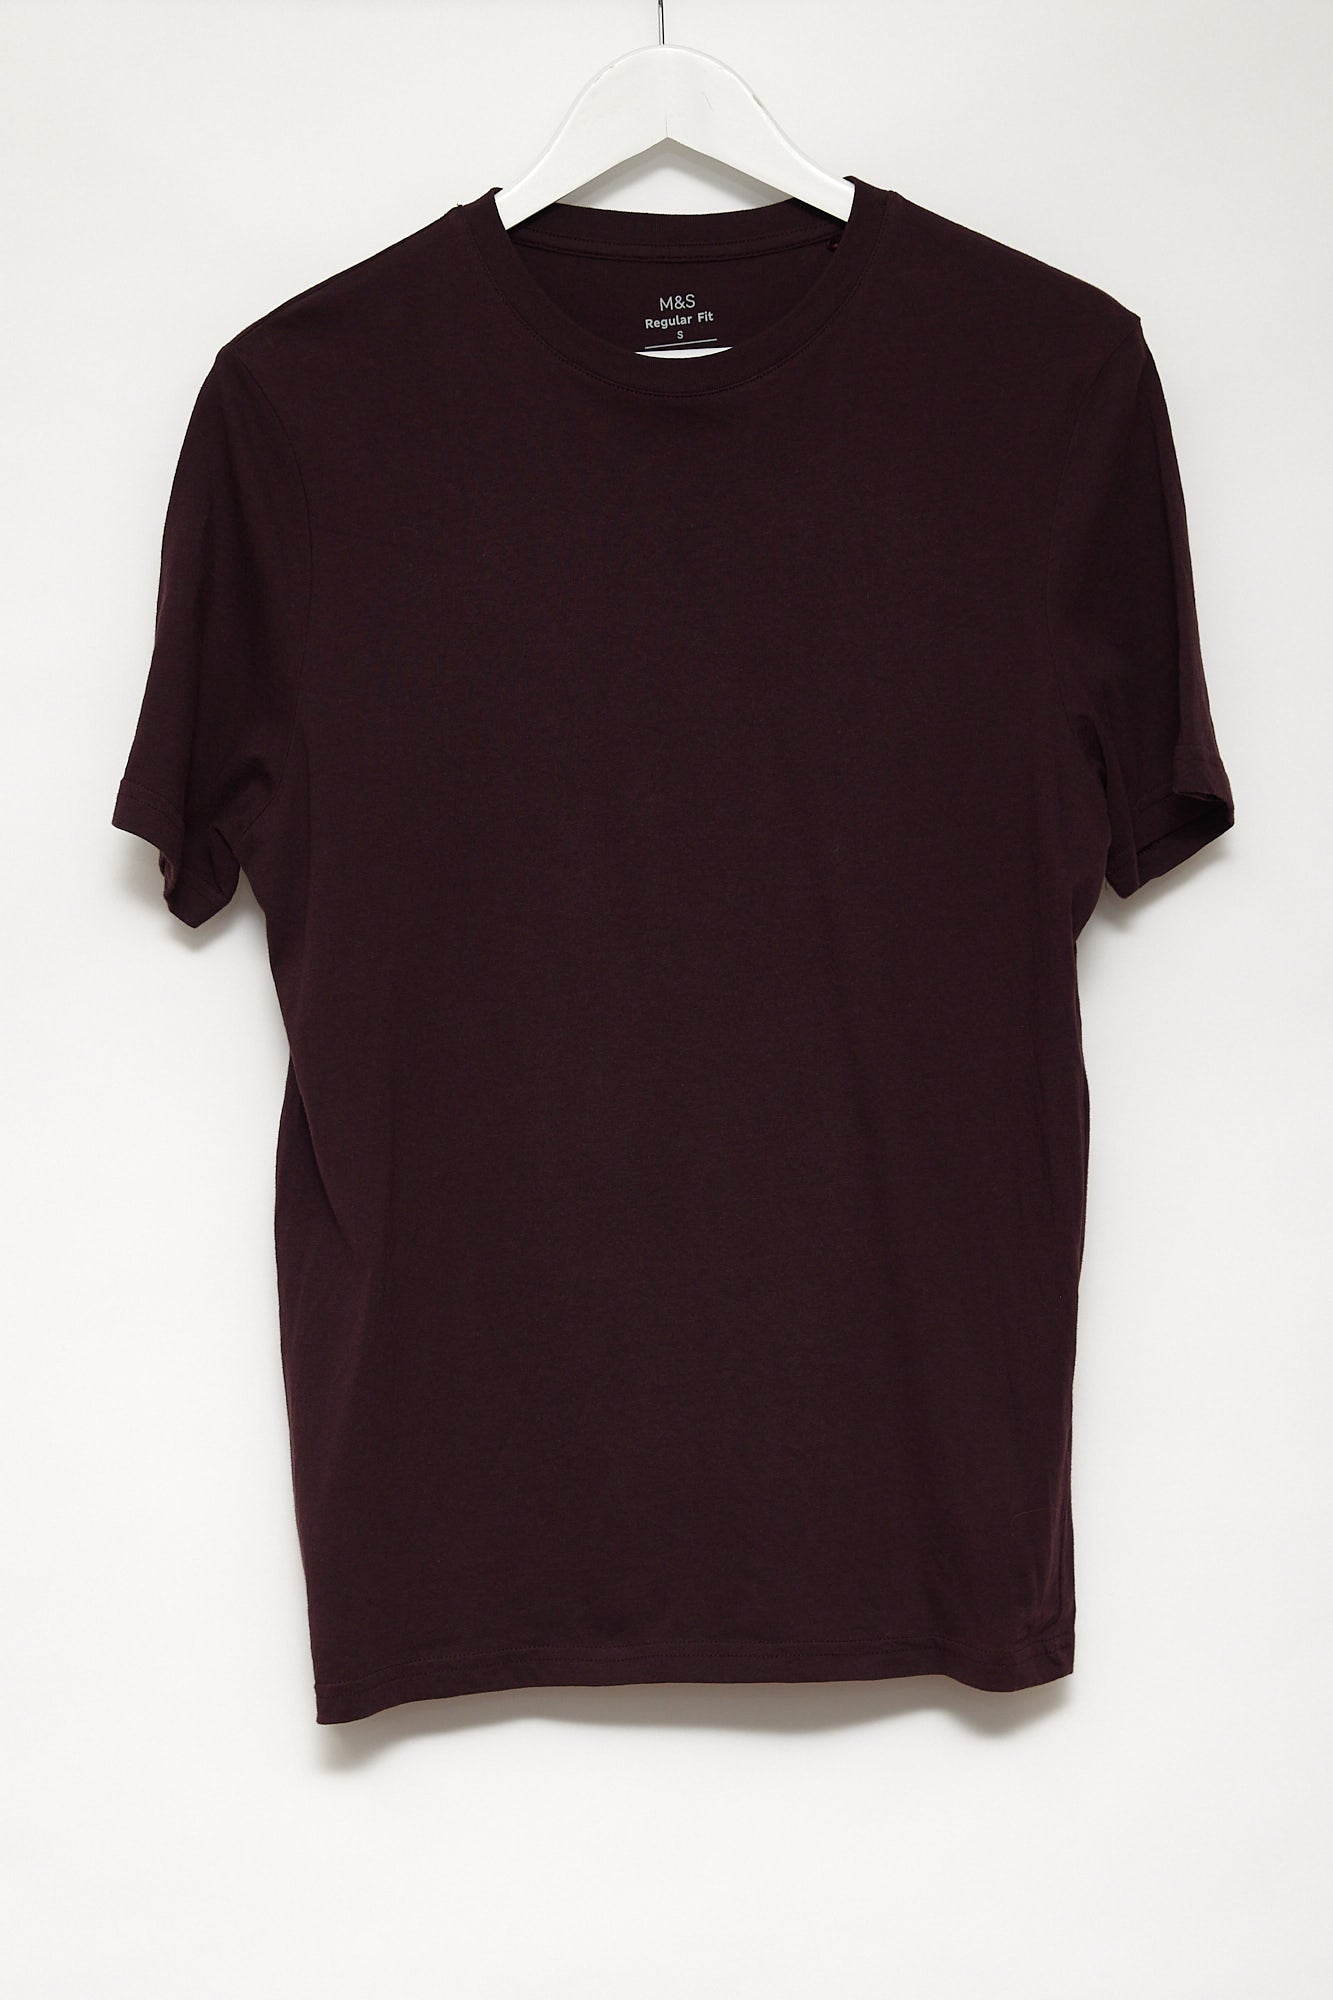 Mens M&S Dark Burgundy T-shirt: Size Small